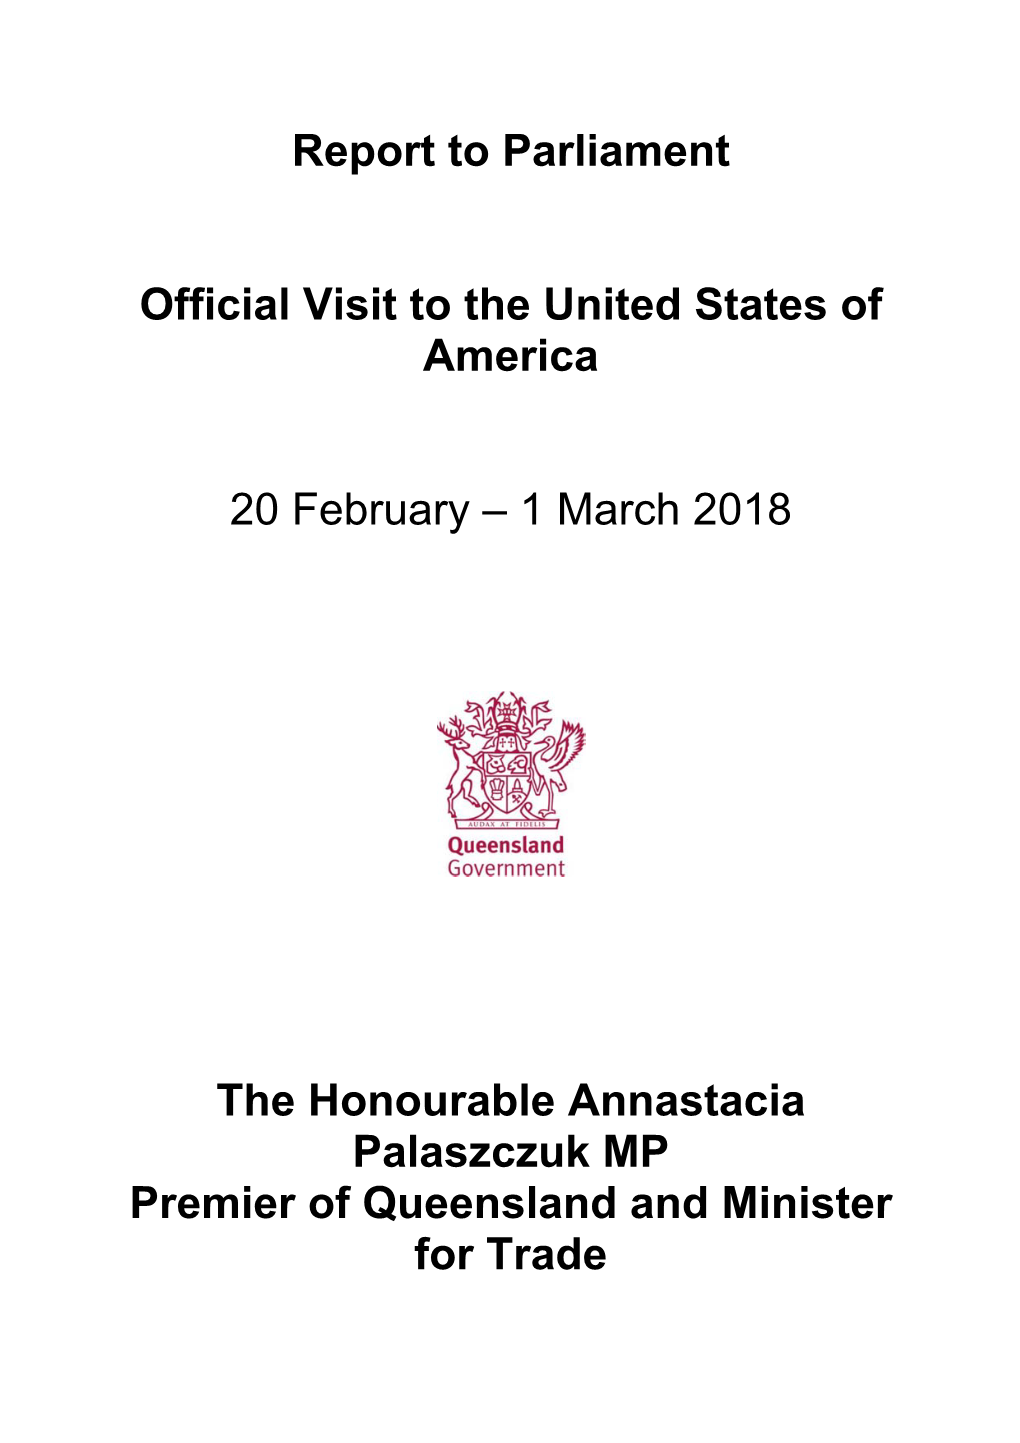 1 March 2018 the Honourable Annastacia Palaszczuk MP Premier